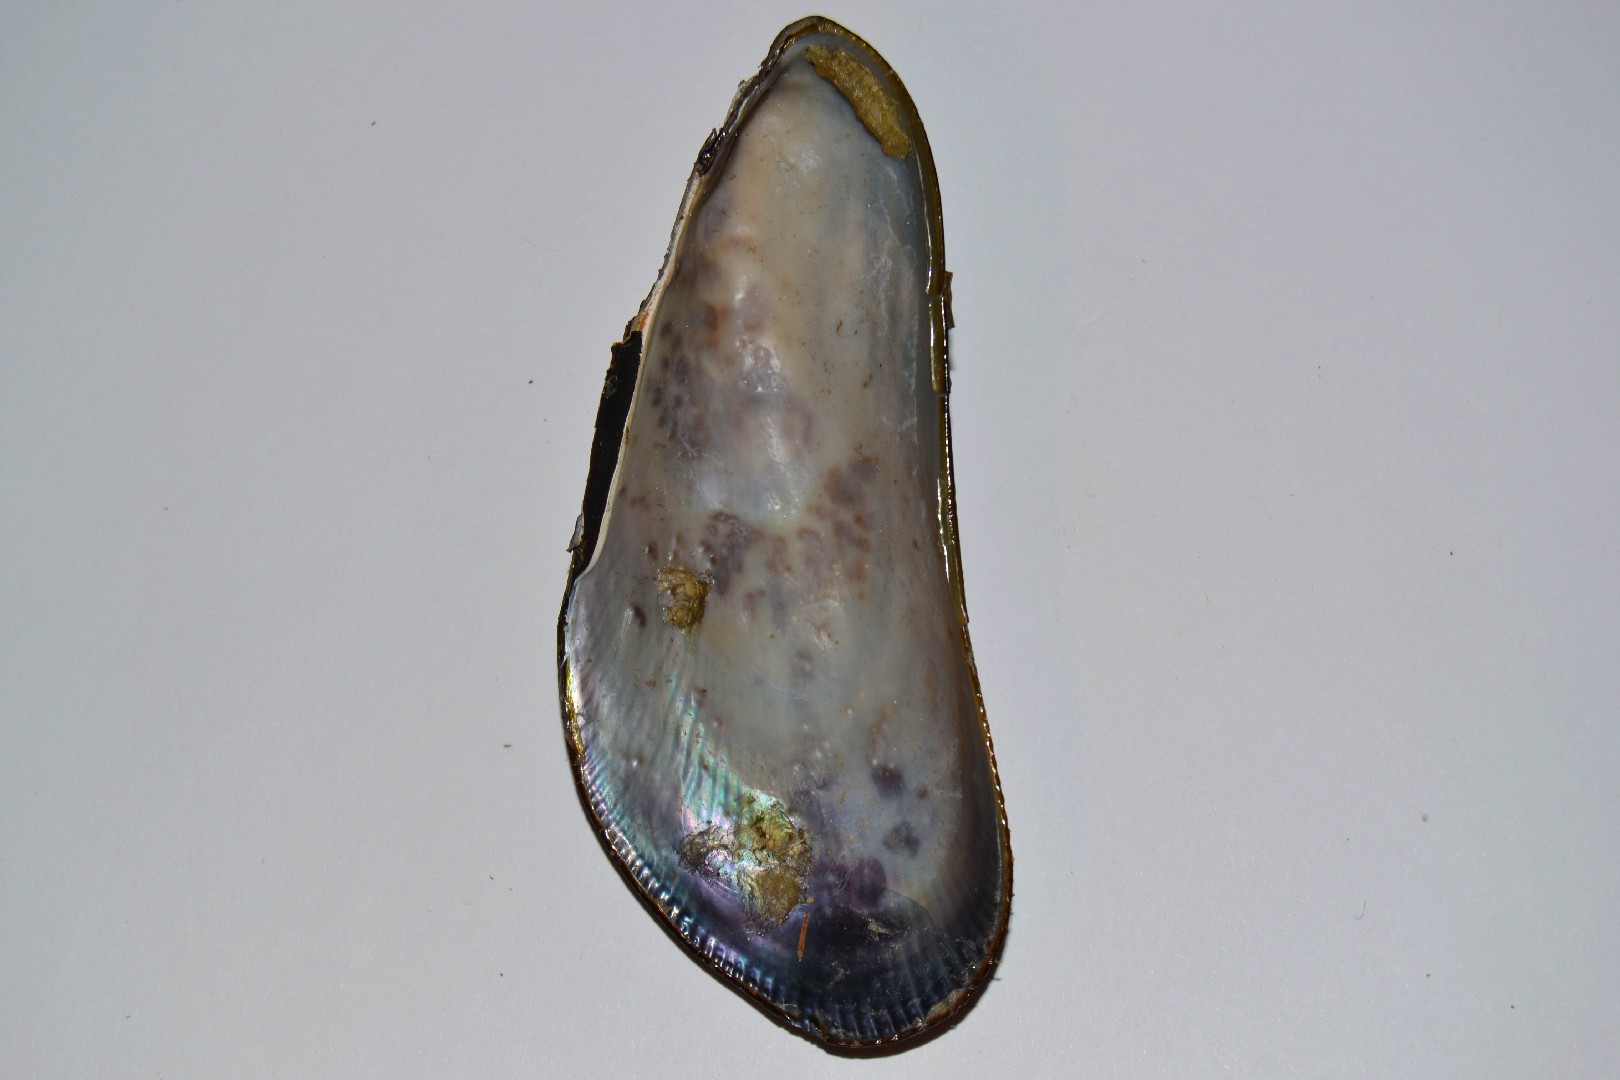 Ribbed mussel (Geukensia demissa)